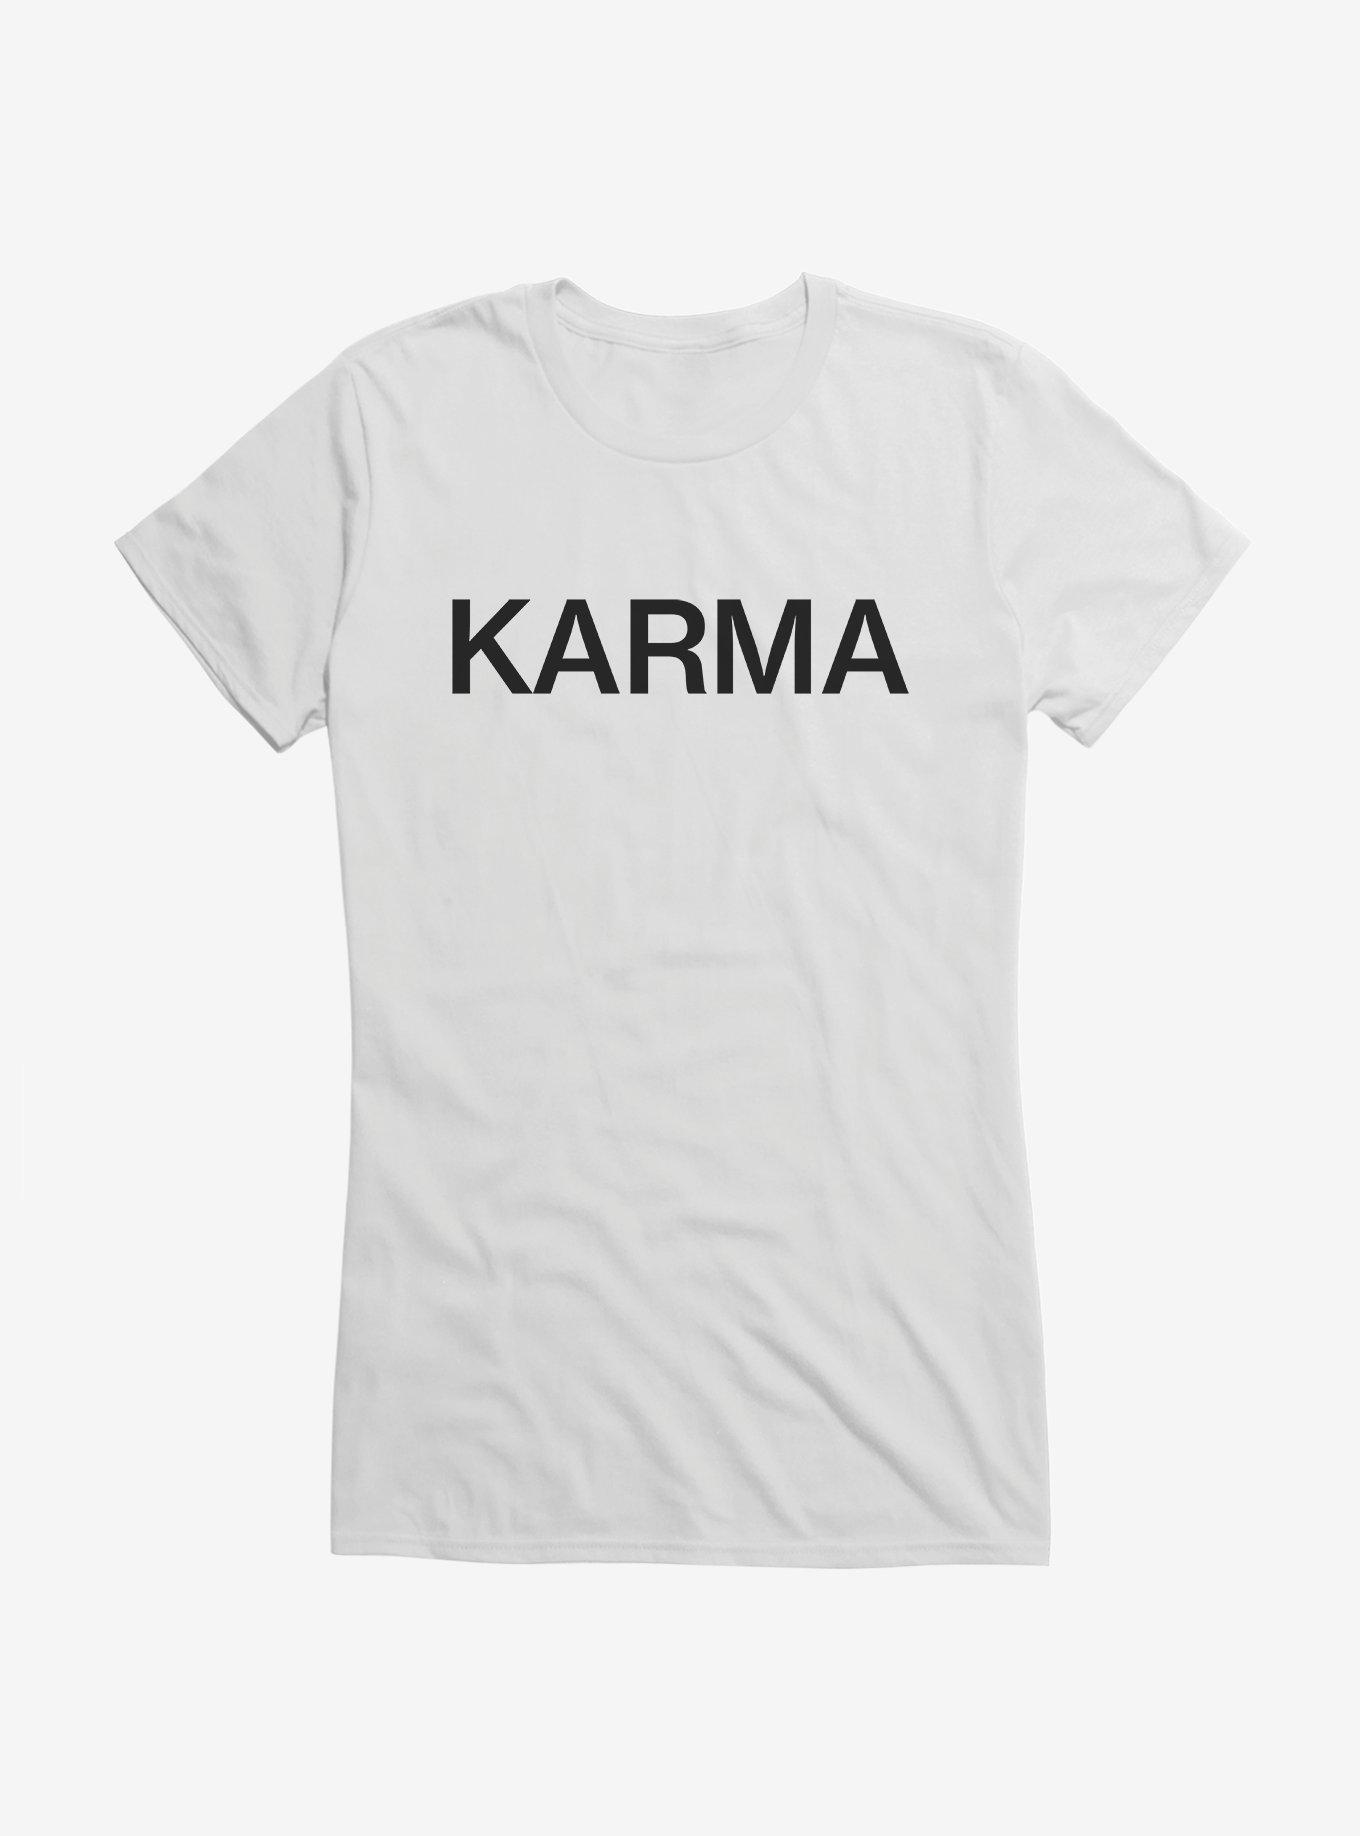 Karma Text Girls T-Shirt